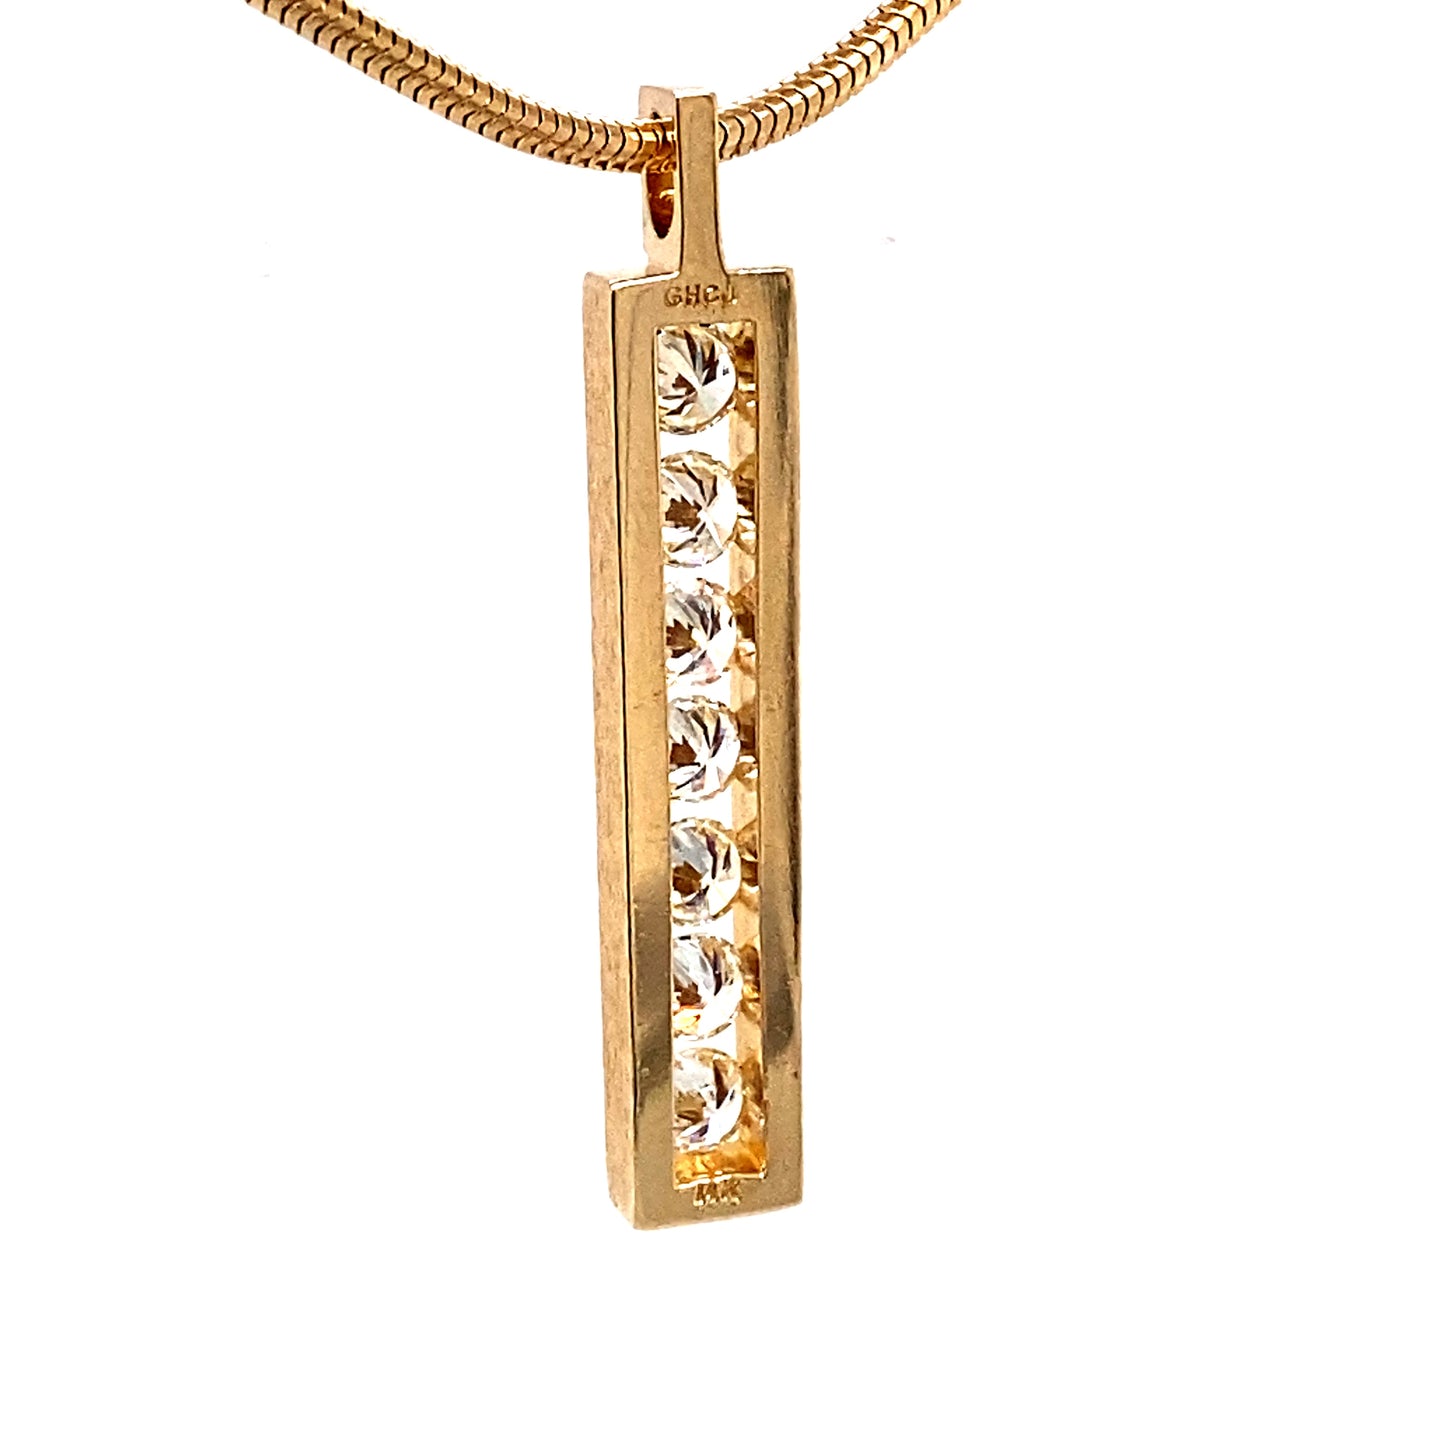 Circa 1960 1.75 Carat Diamond Bar Pendant and Chain in 14 Karat Gold